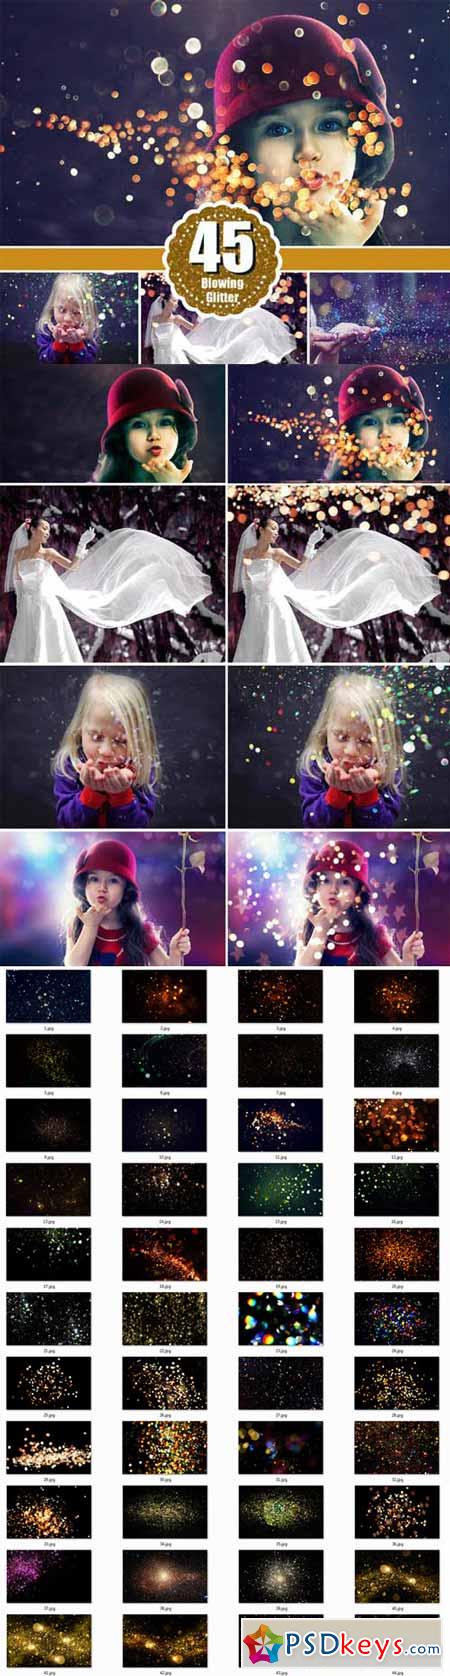 Blowing glitter photoshop overlays 479064